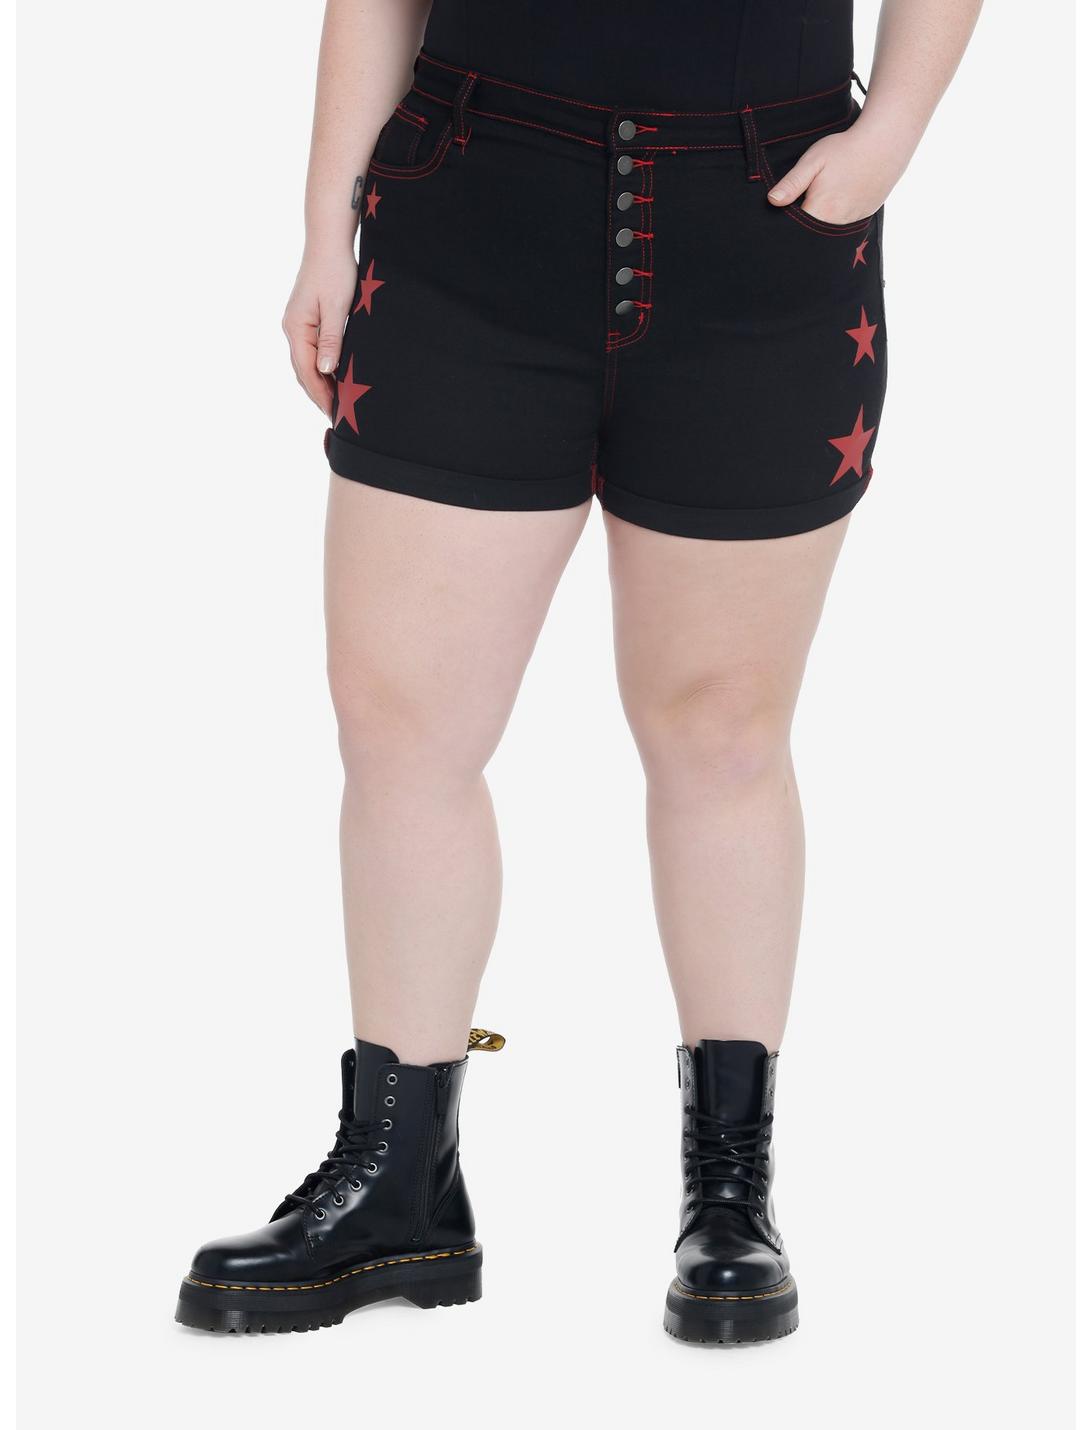 Black & Red Star Girls Denim Shorts Plus Size, RED, hi-res